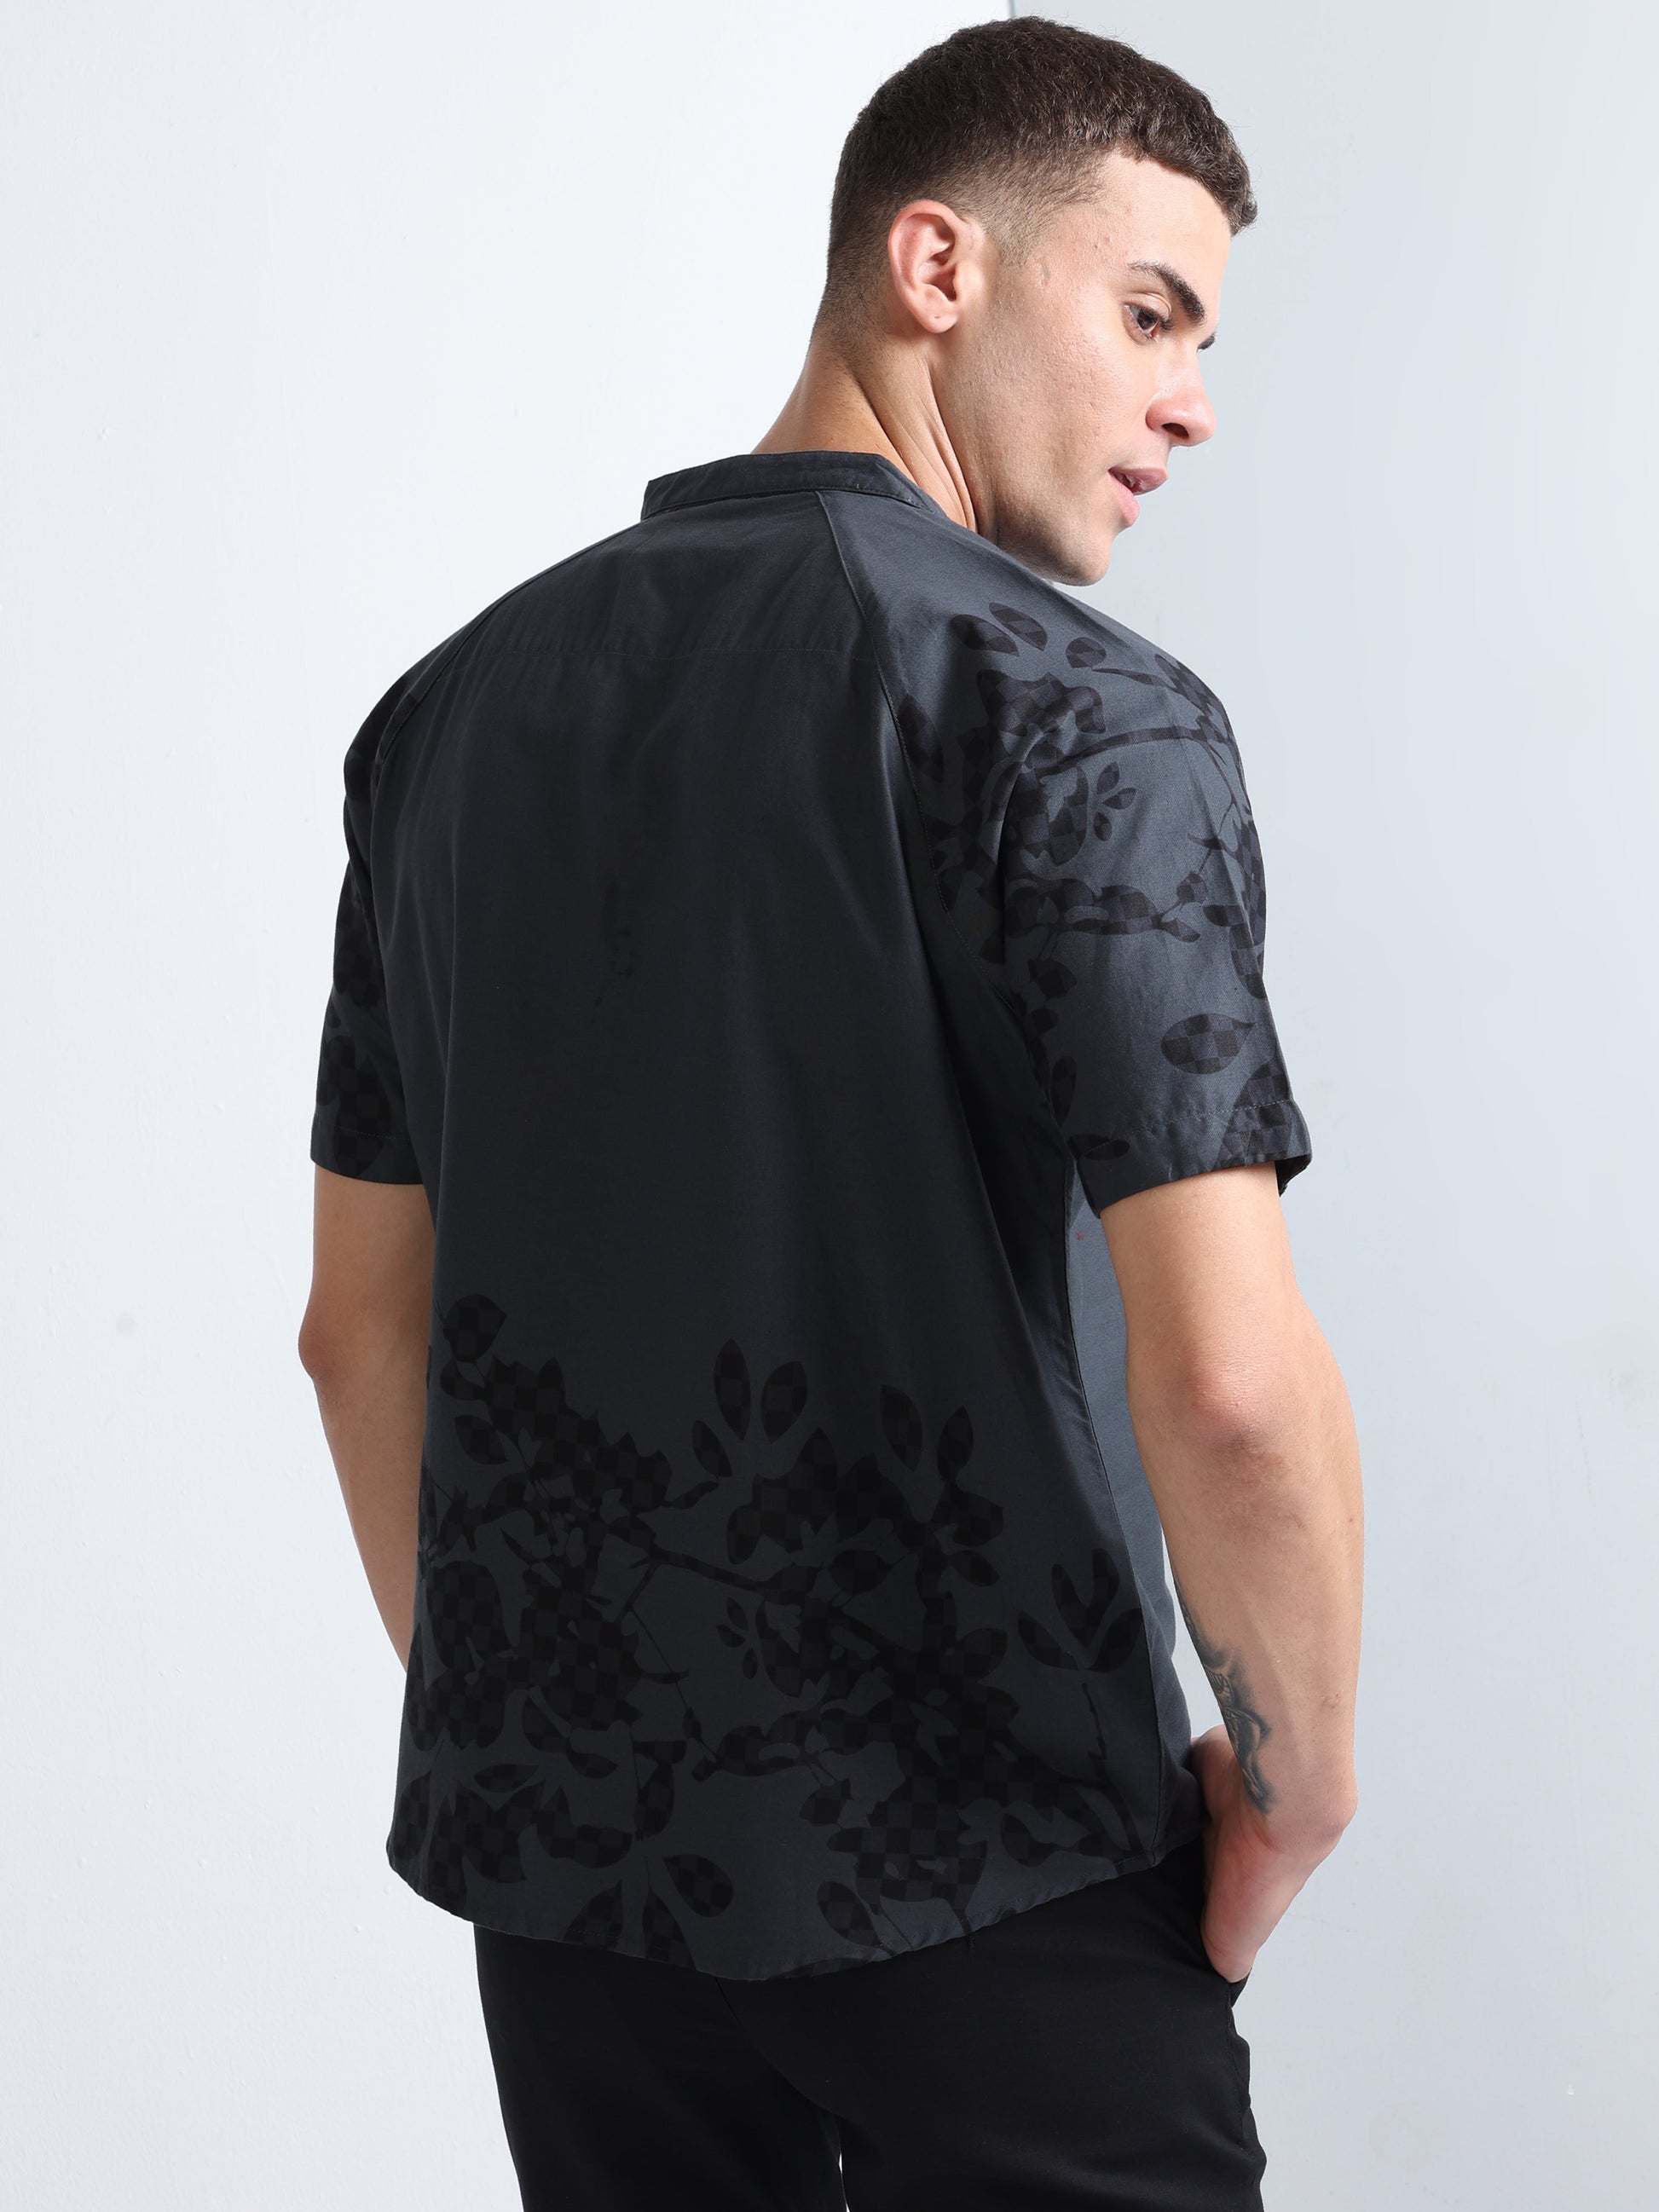 Buy Chinese Collar Raglan Sleeve Stylish Shirt Online.